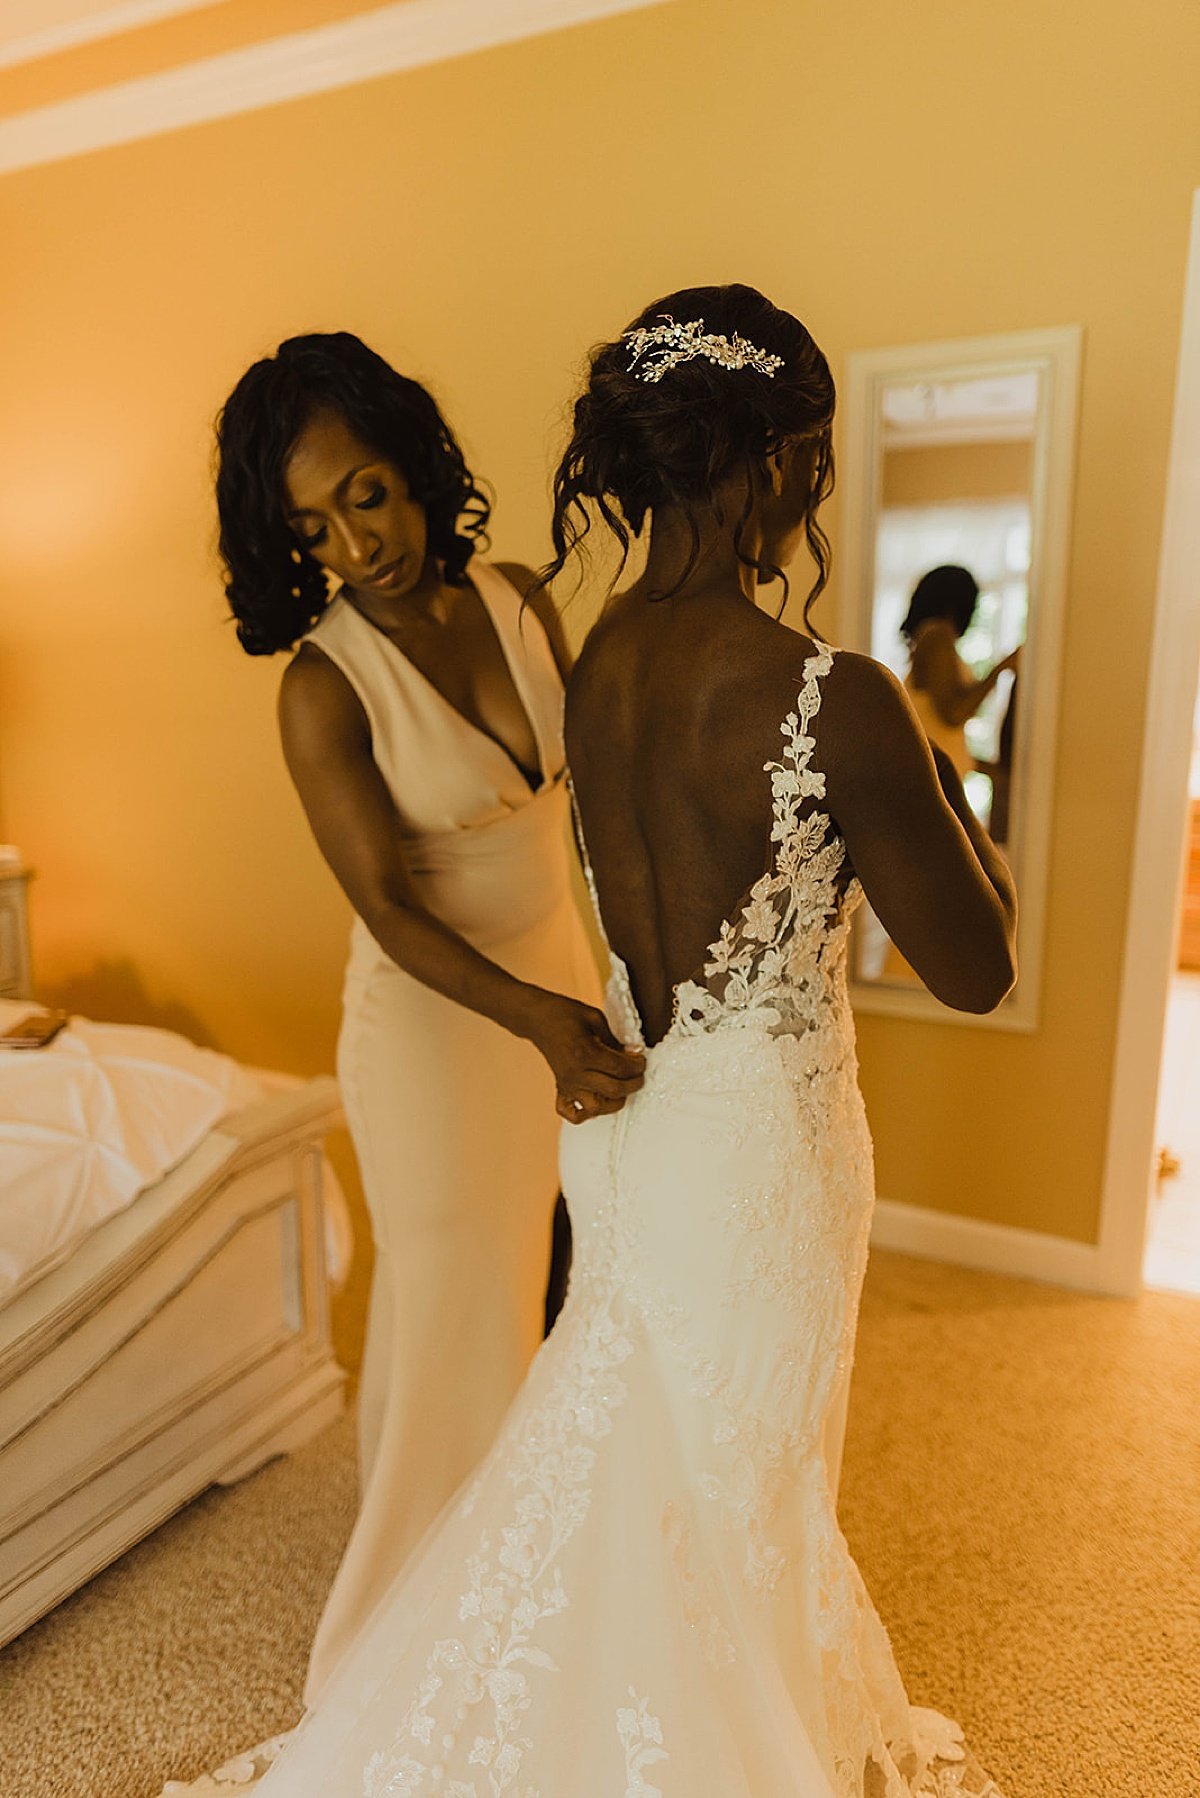  Mother of the bride helps adjust wedding dress in shoot by alaska wedding photographer  